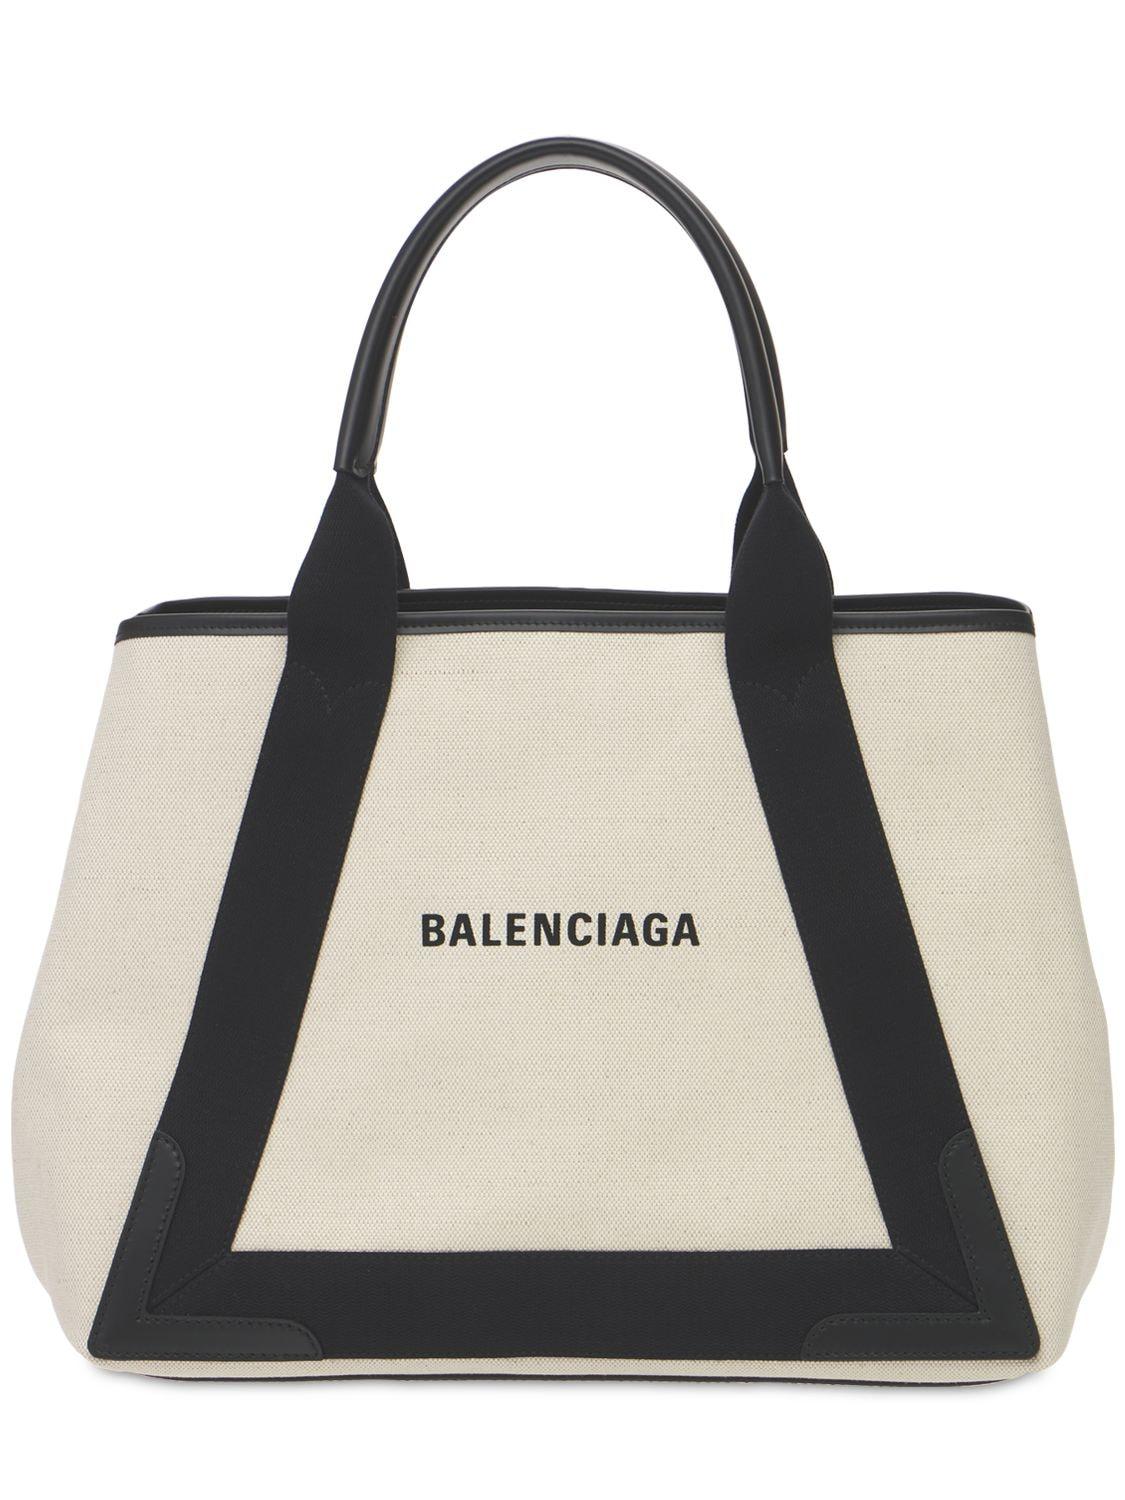 Balenciaga New Md Navy Cabas Canvas Tote Bag in Natural/Black (Black) | Lyst